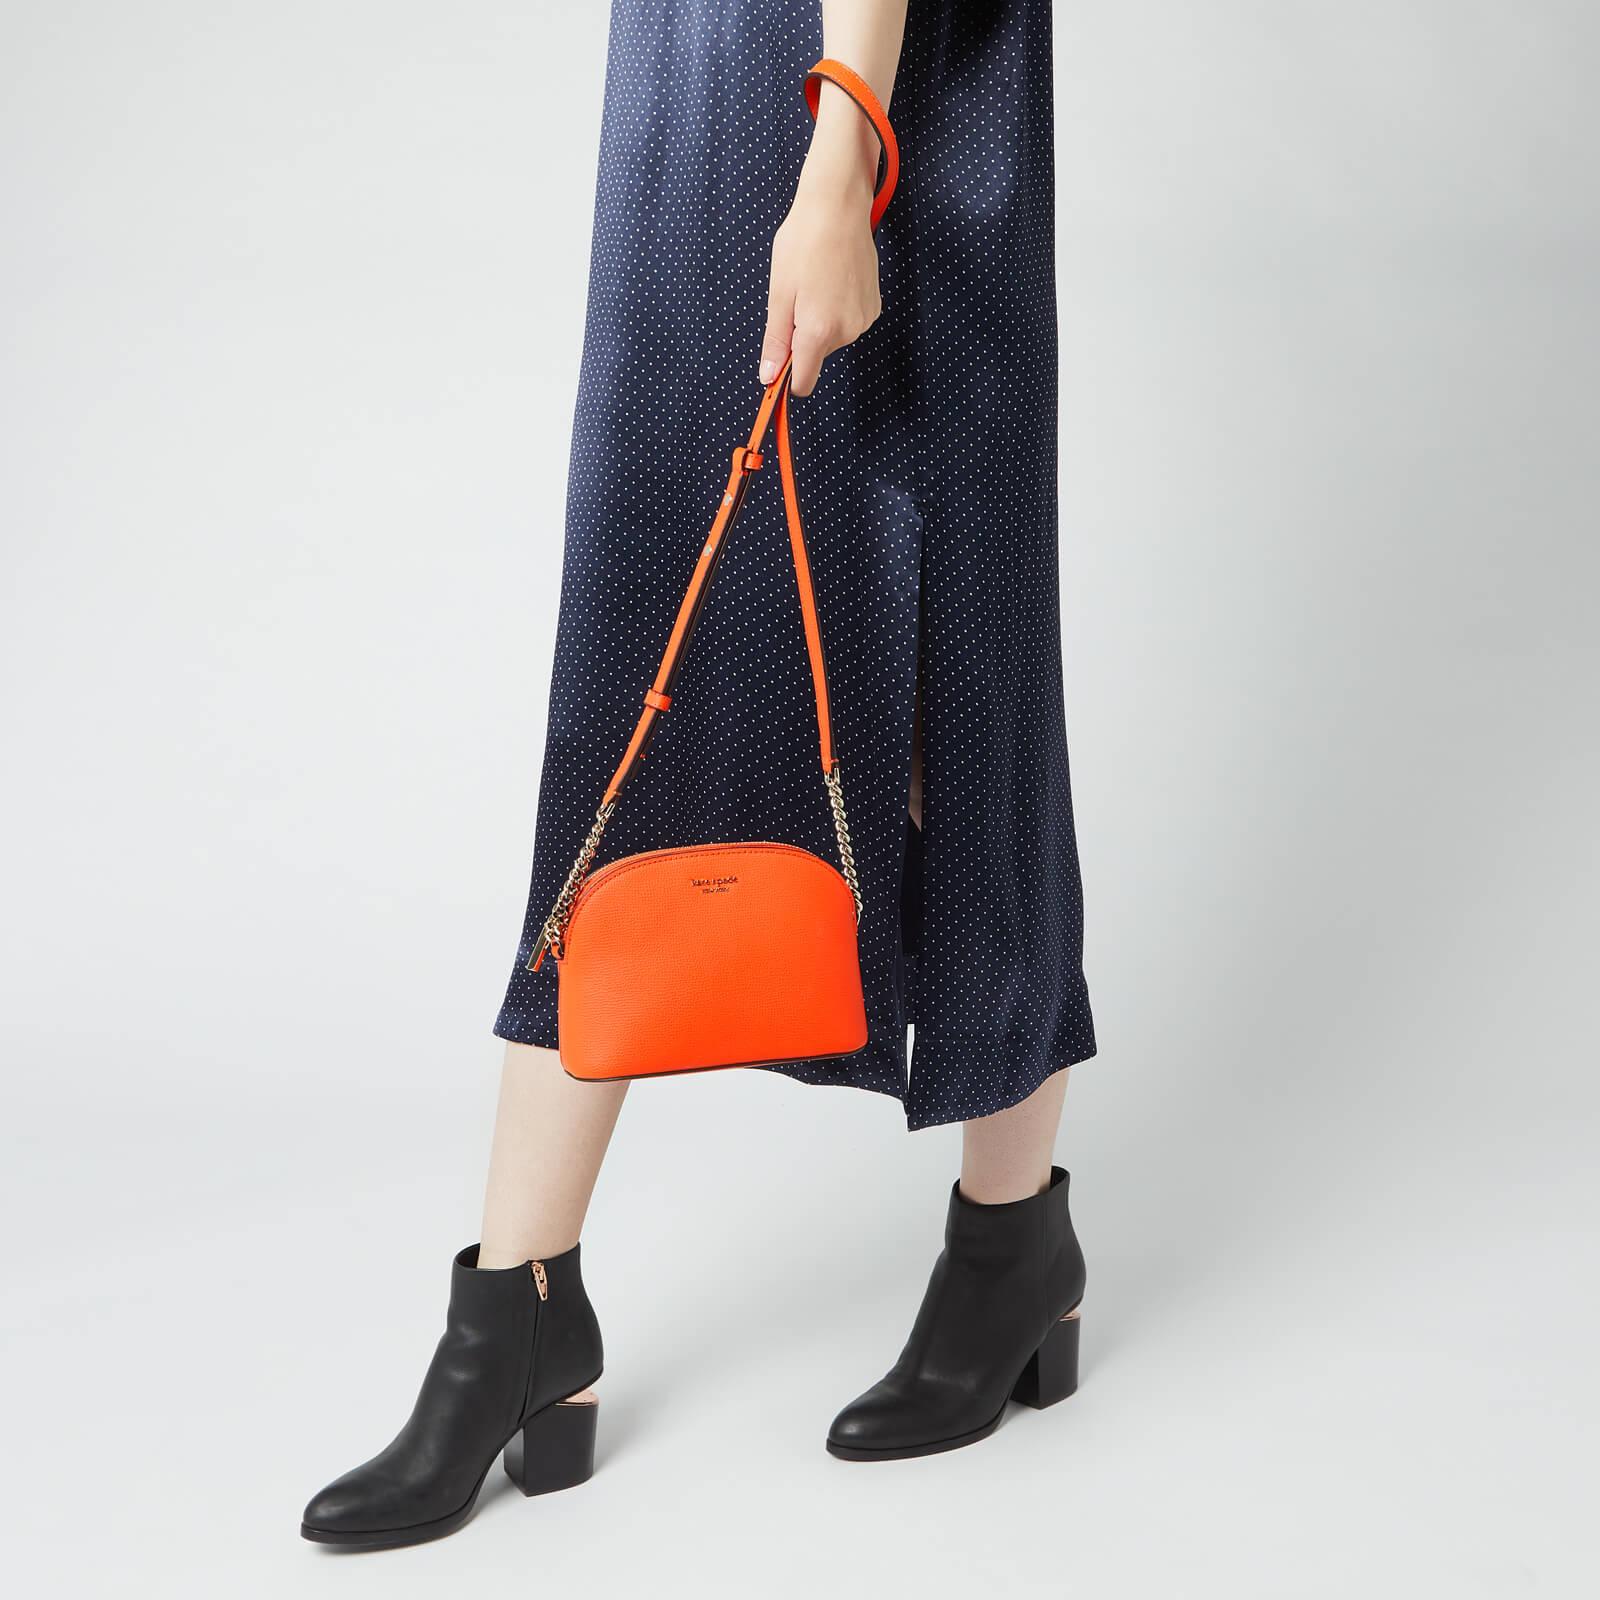 Kate Spade mini black shoulder bag purse | Black shoulder bag, Purses and  bags, Bags